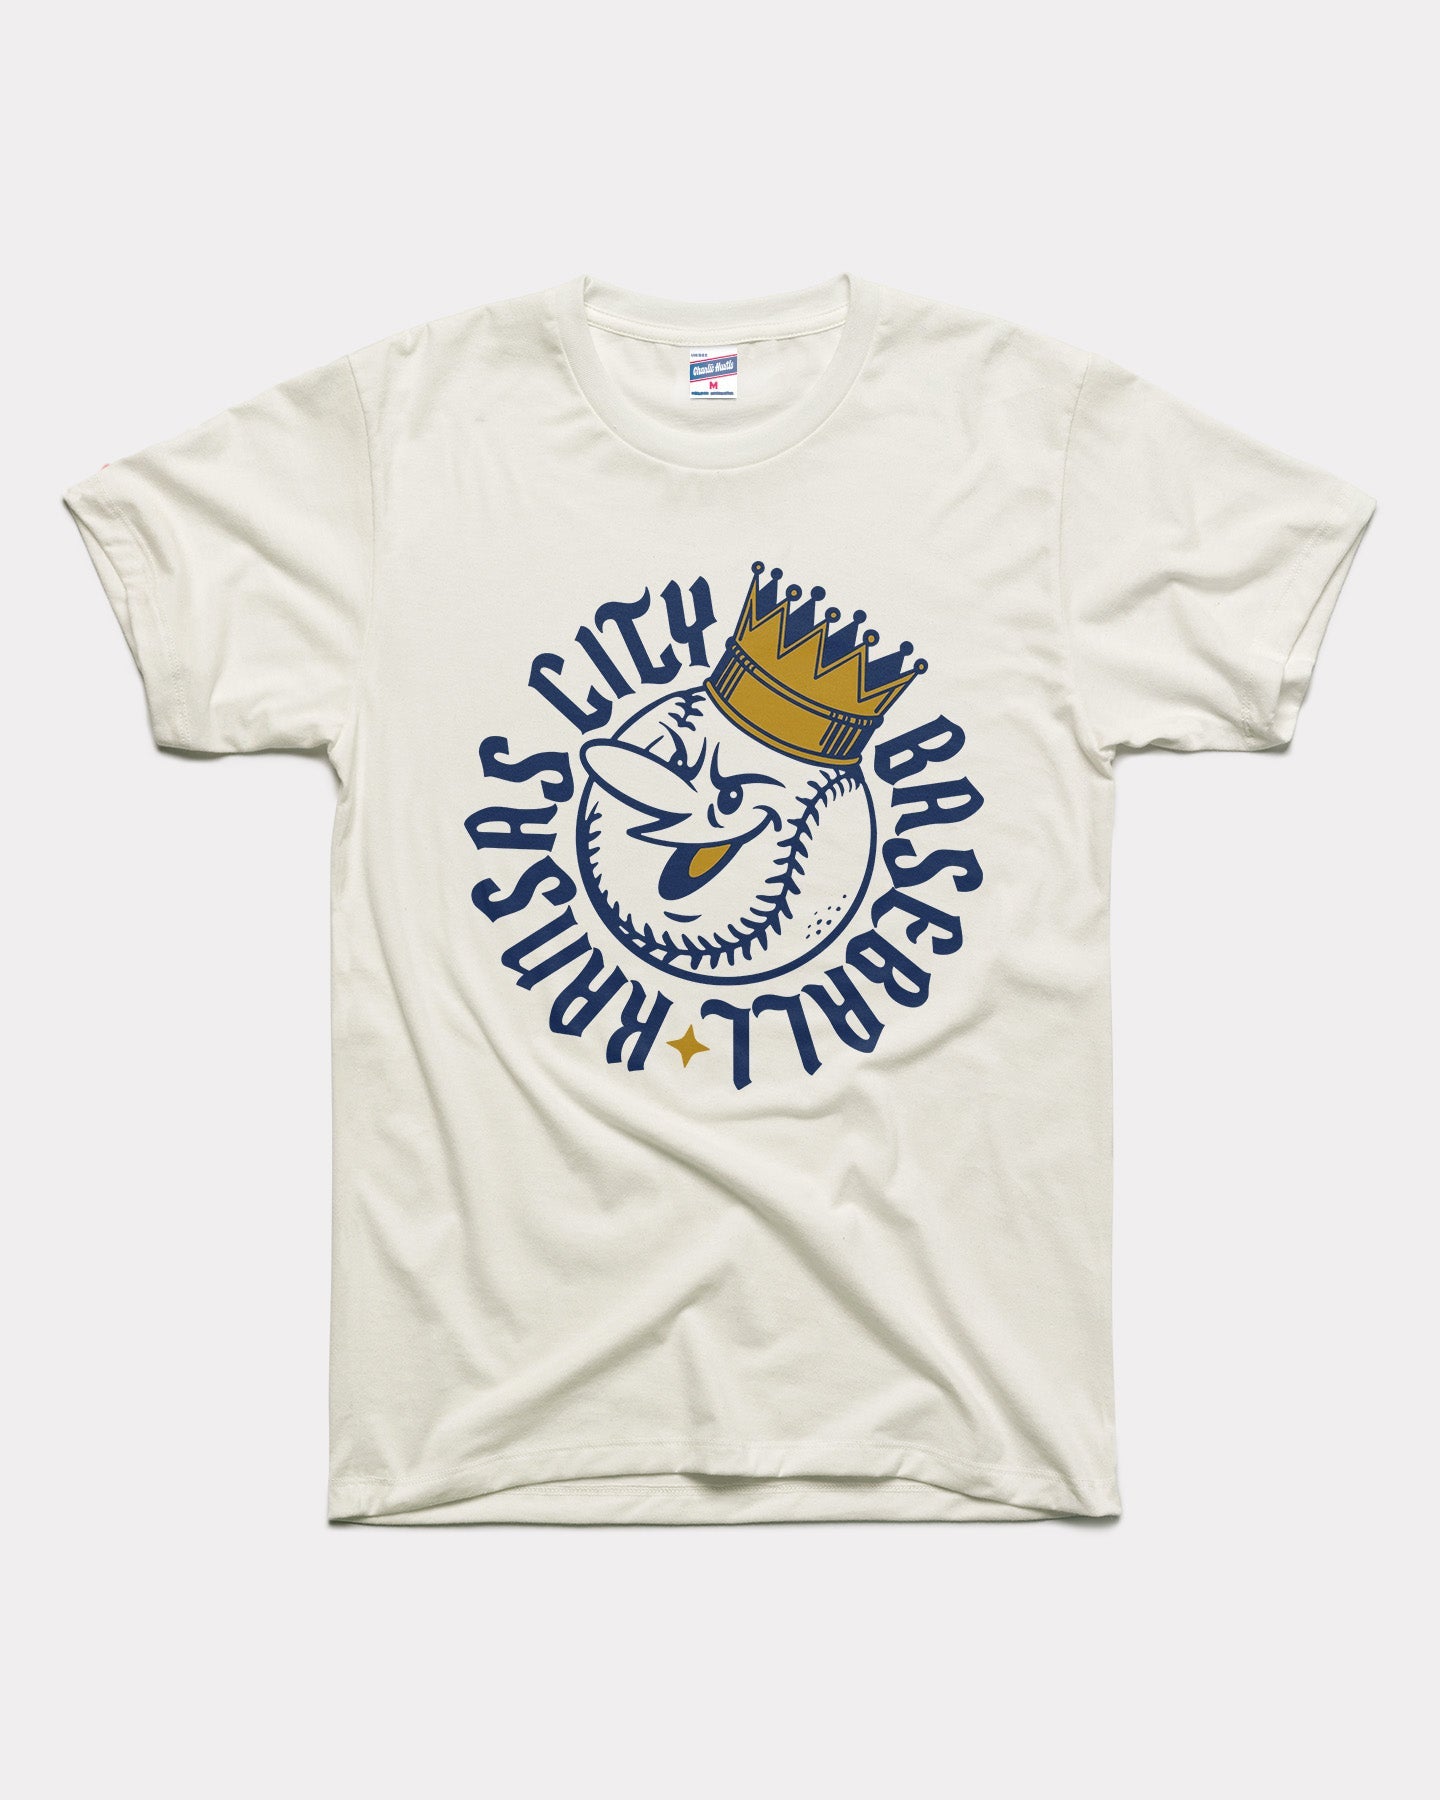 SavvyCustomShirts KC Royals Shirt, Royals Shirt, KC Baseball Shirt, Kansas City Royals T-Shirt, KC Shirt, Take Me Out to The Ballgame Royals T-Shirt